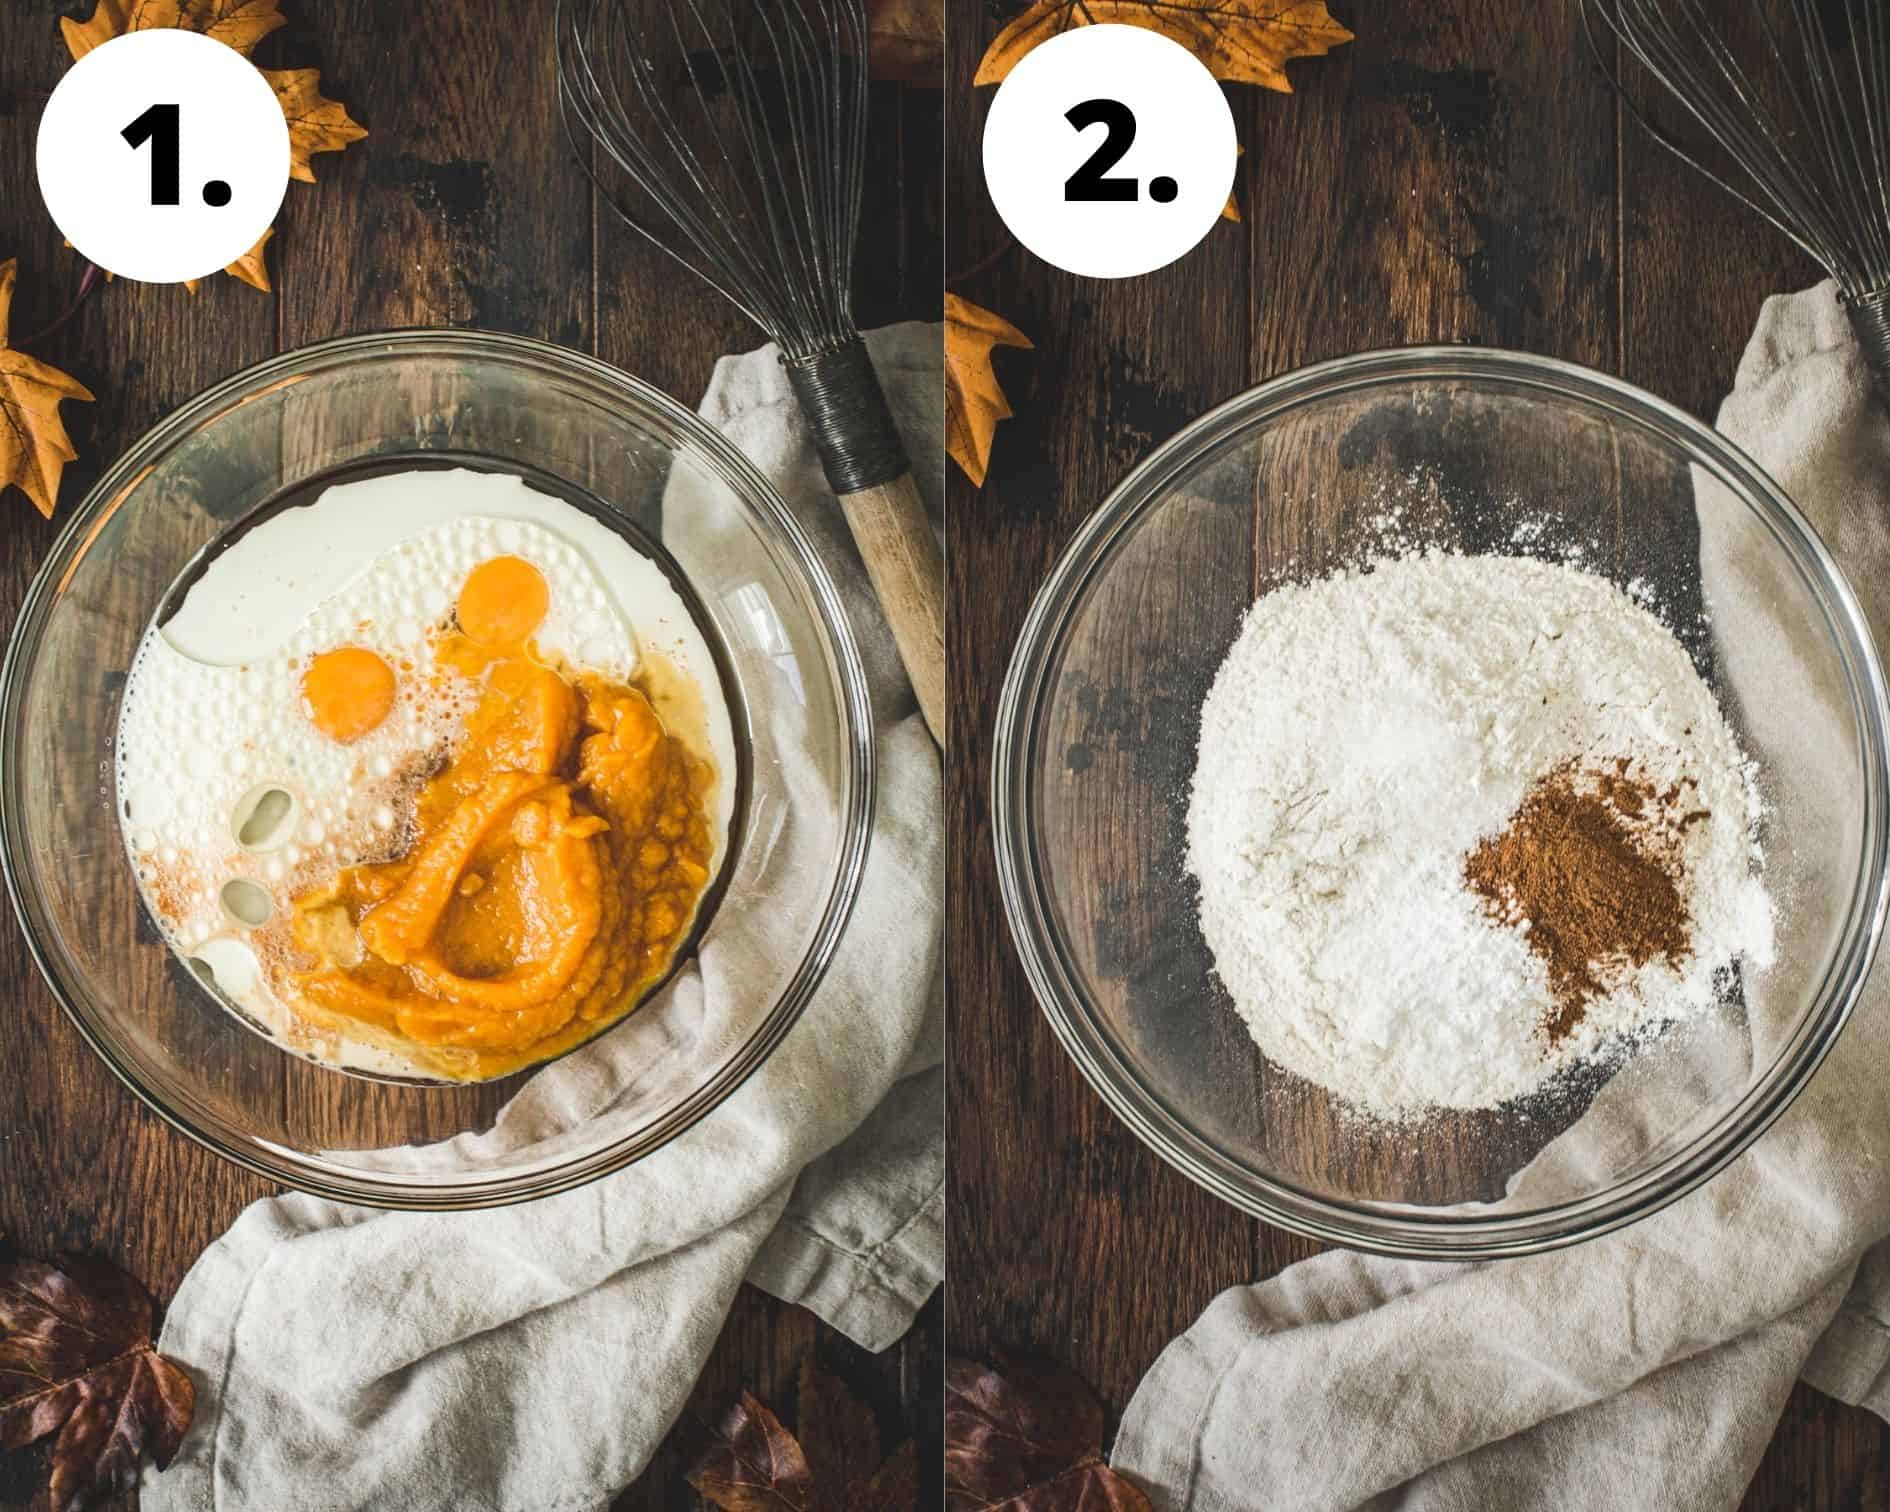 Pumpkin spice waffles recipe process steps 1 and 2.